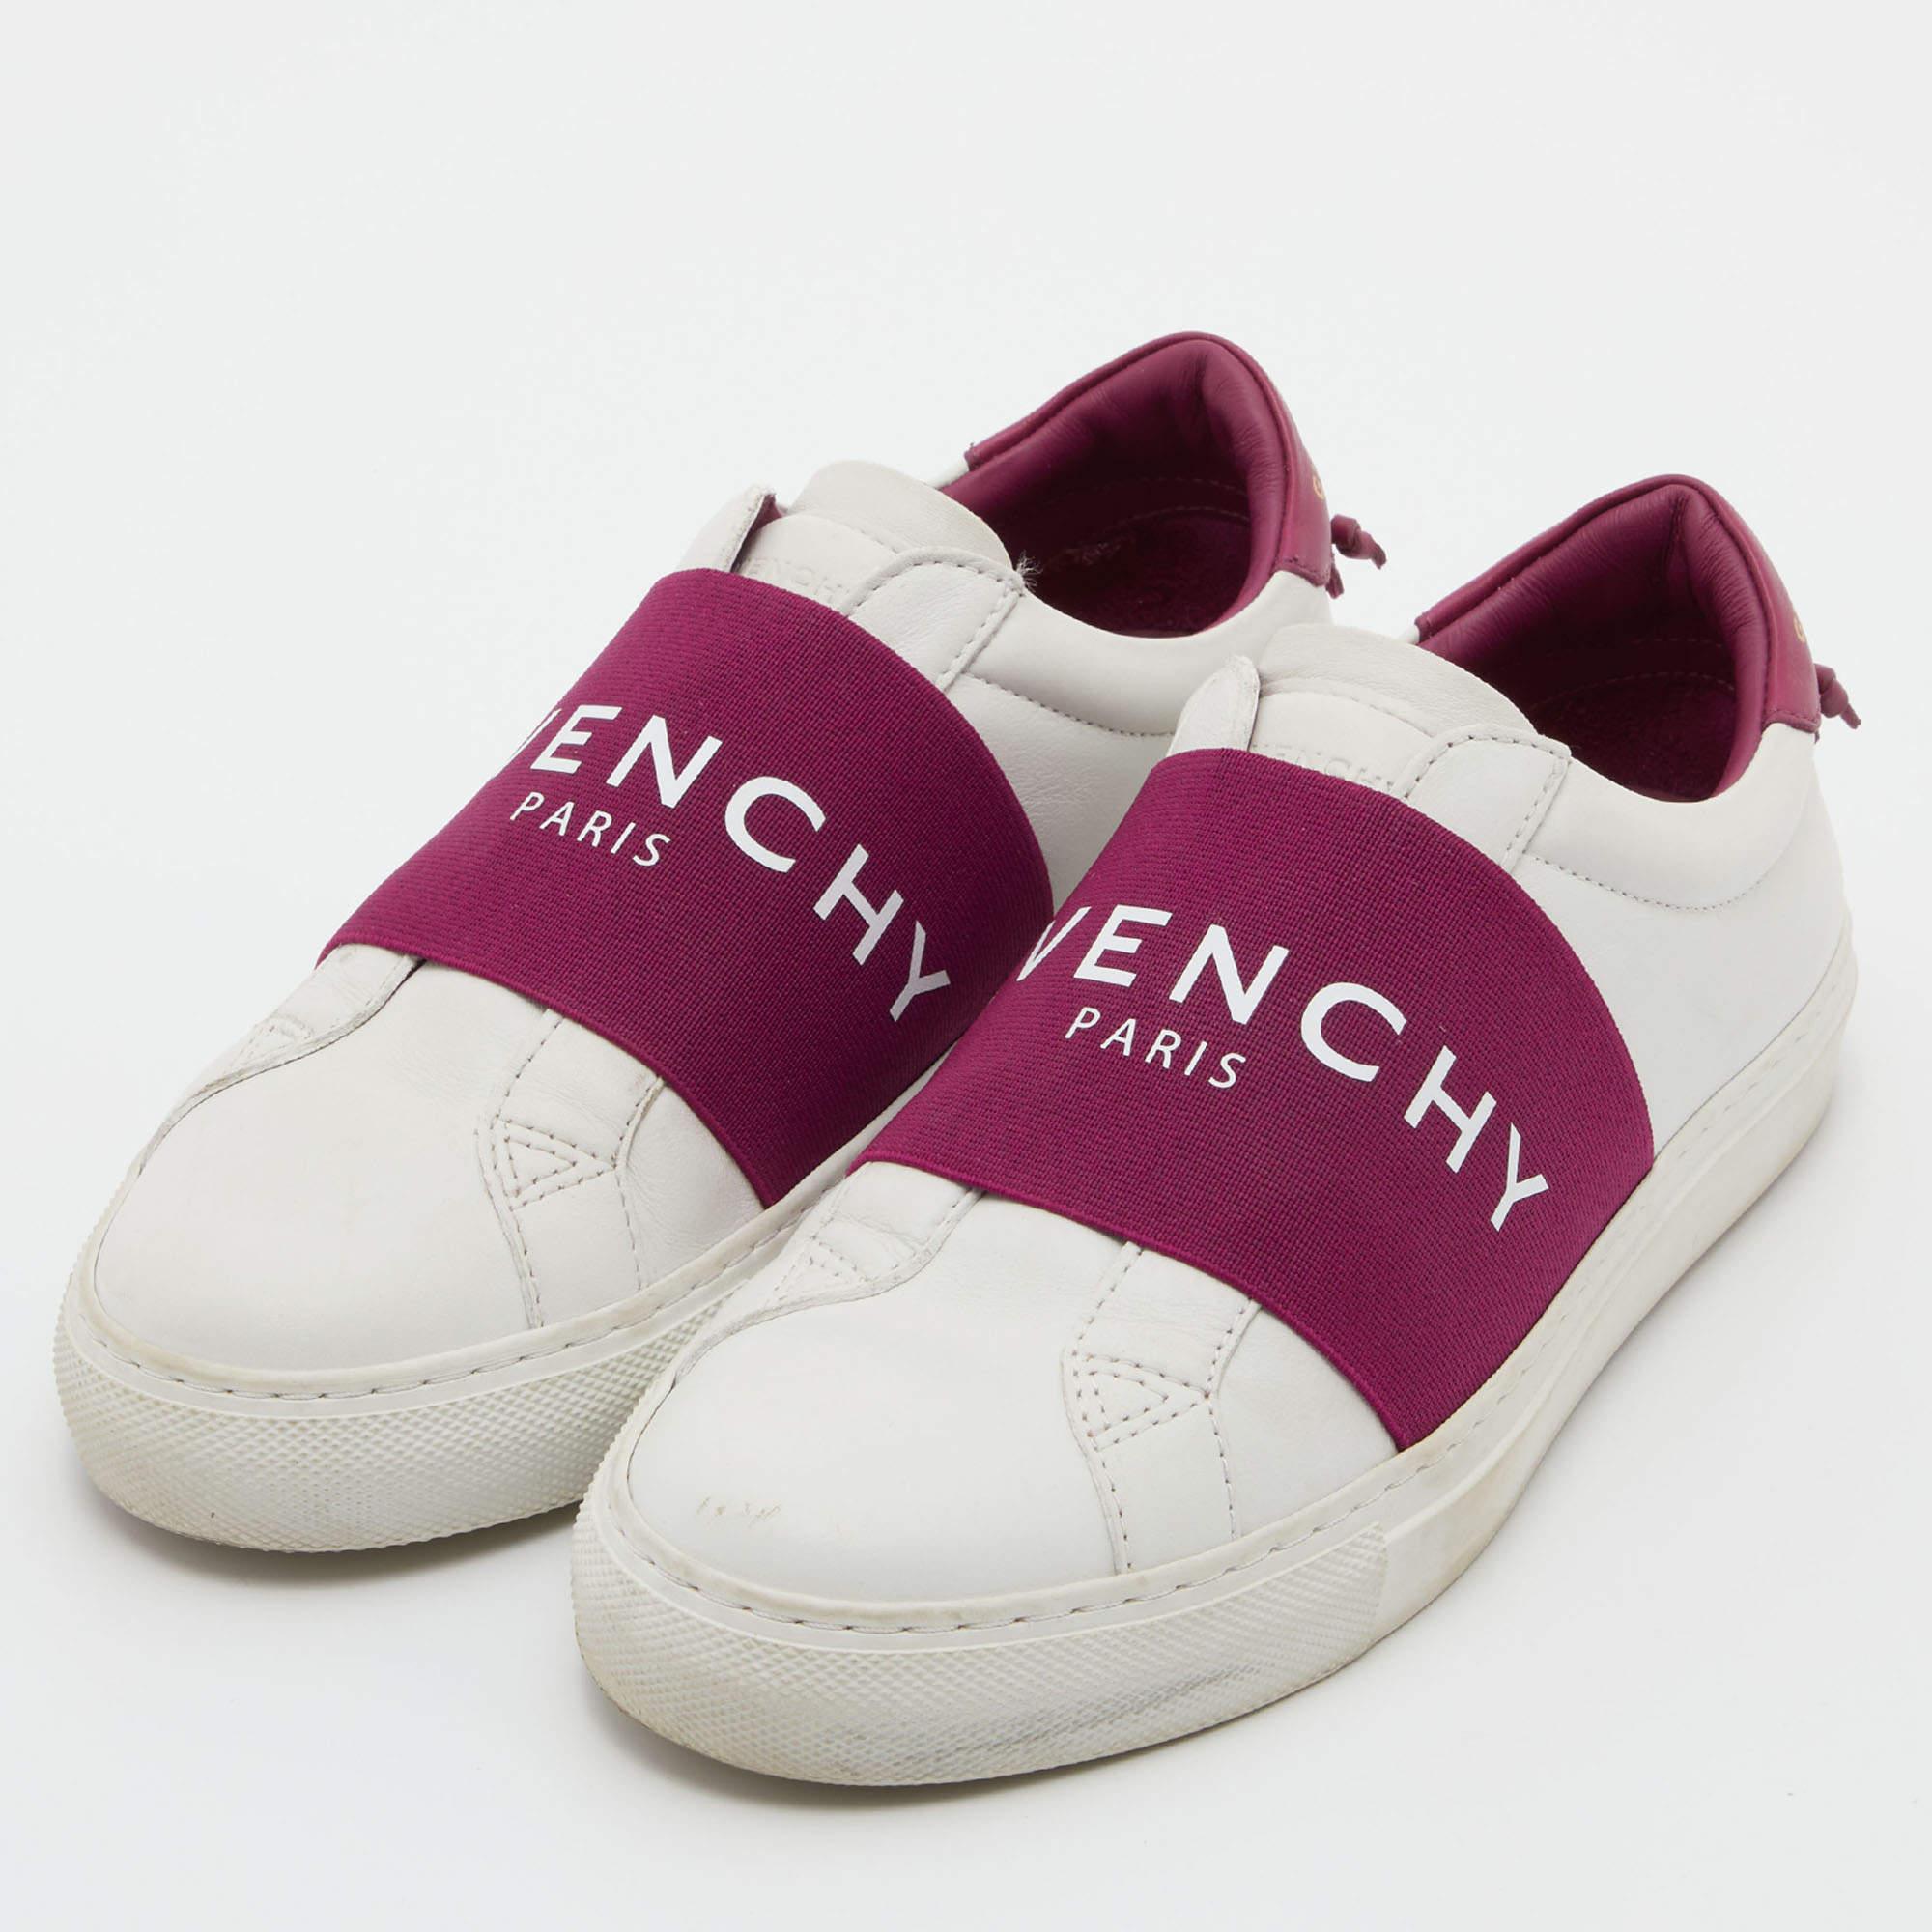 Givenchy White/Plum Leather Urban Street Slip On Sneakers Size 36 4